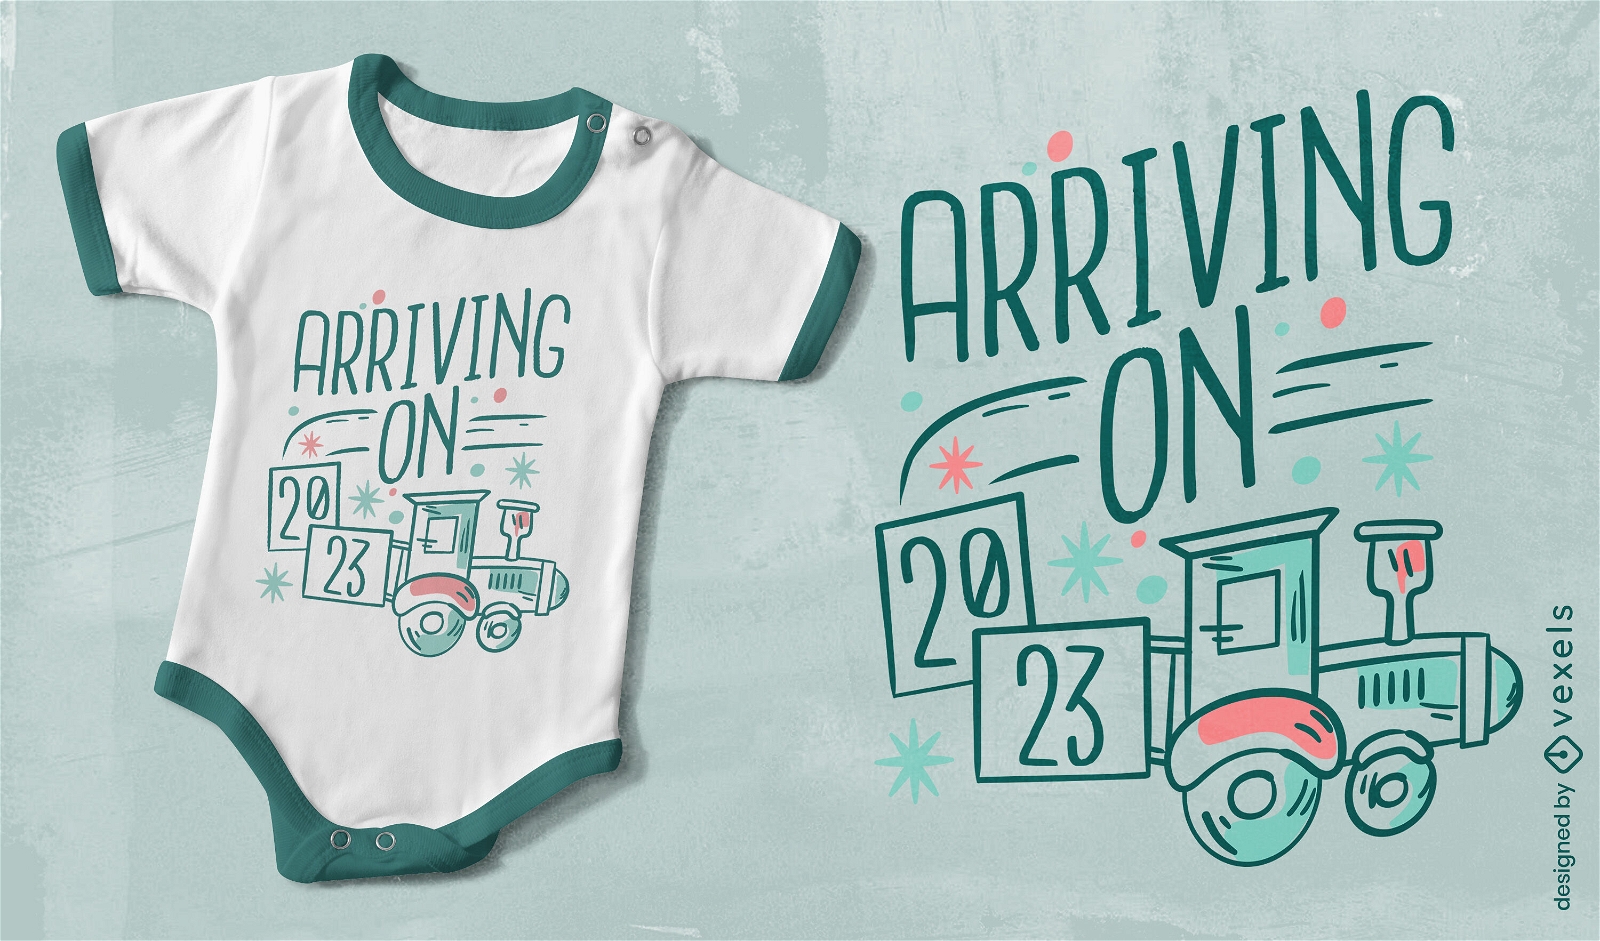 2023 new baby announcement t-shirt design